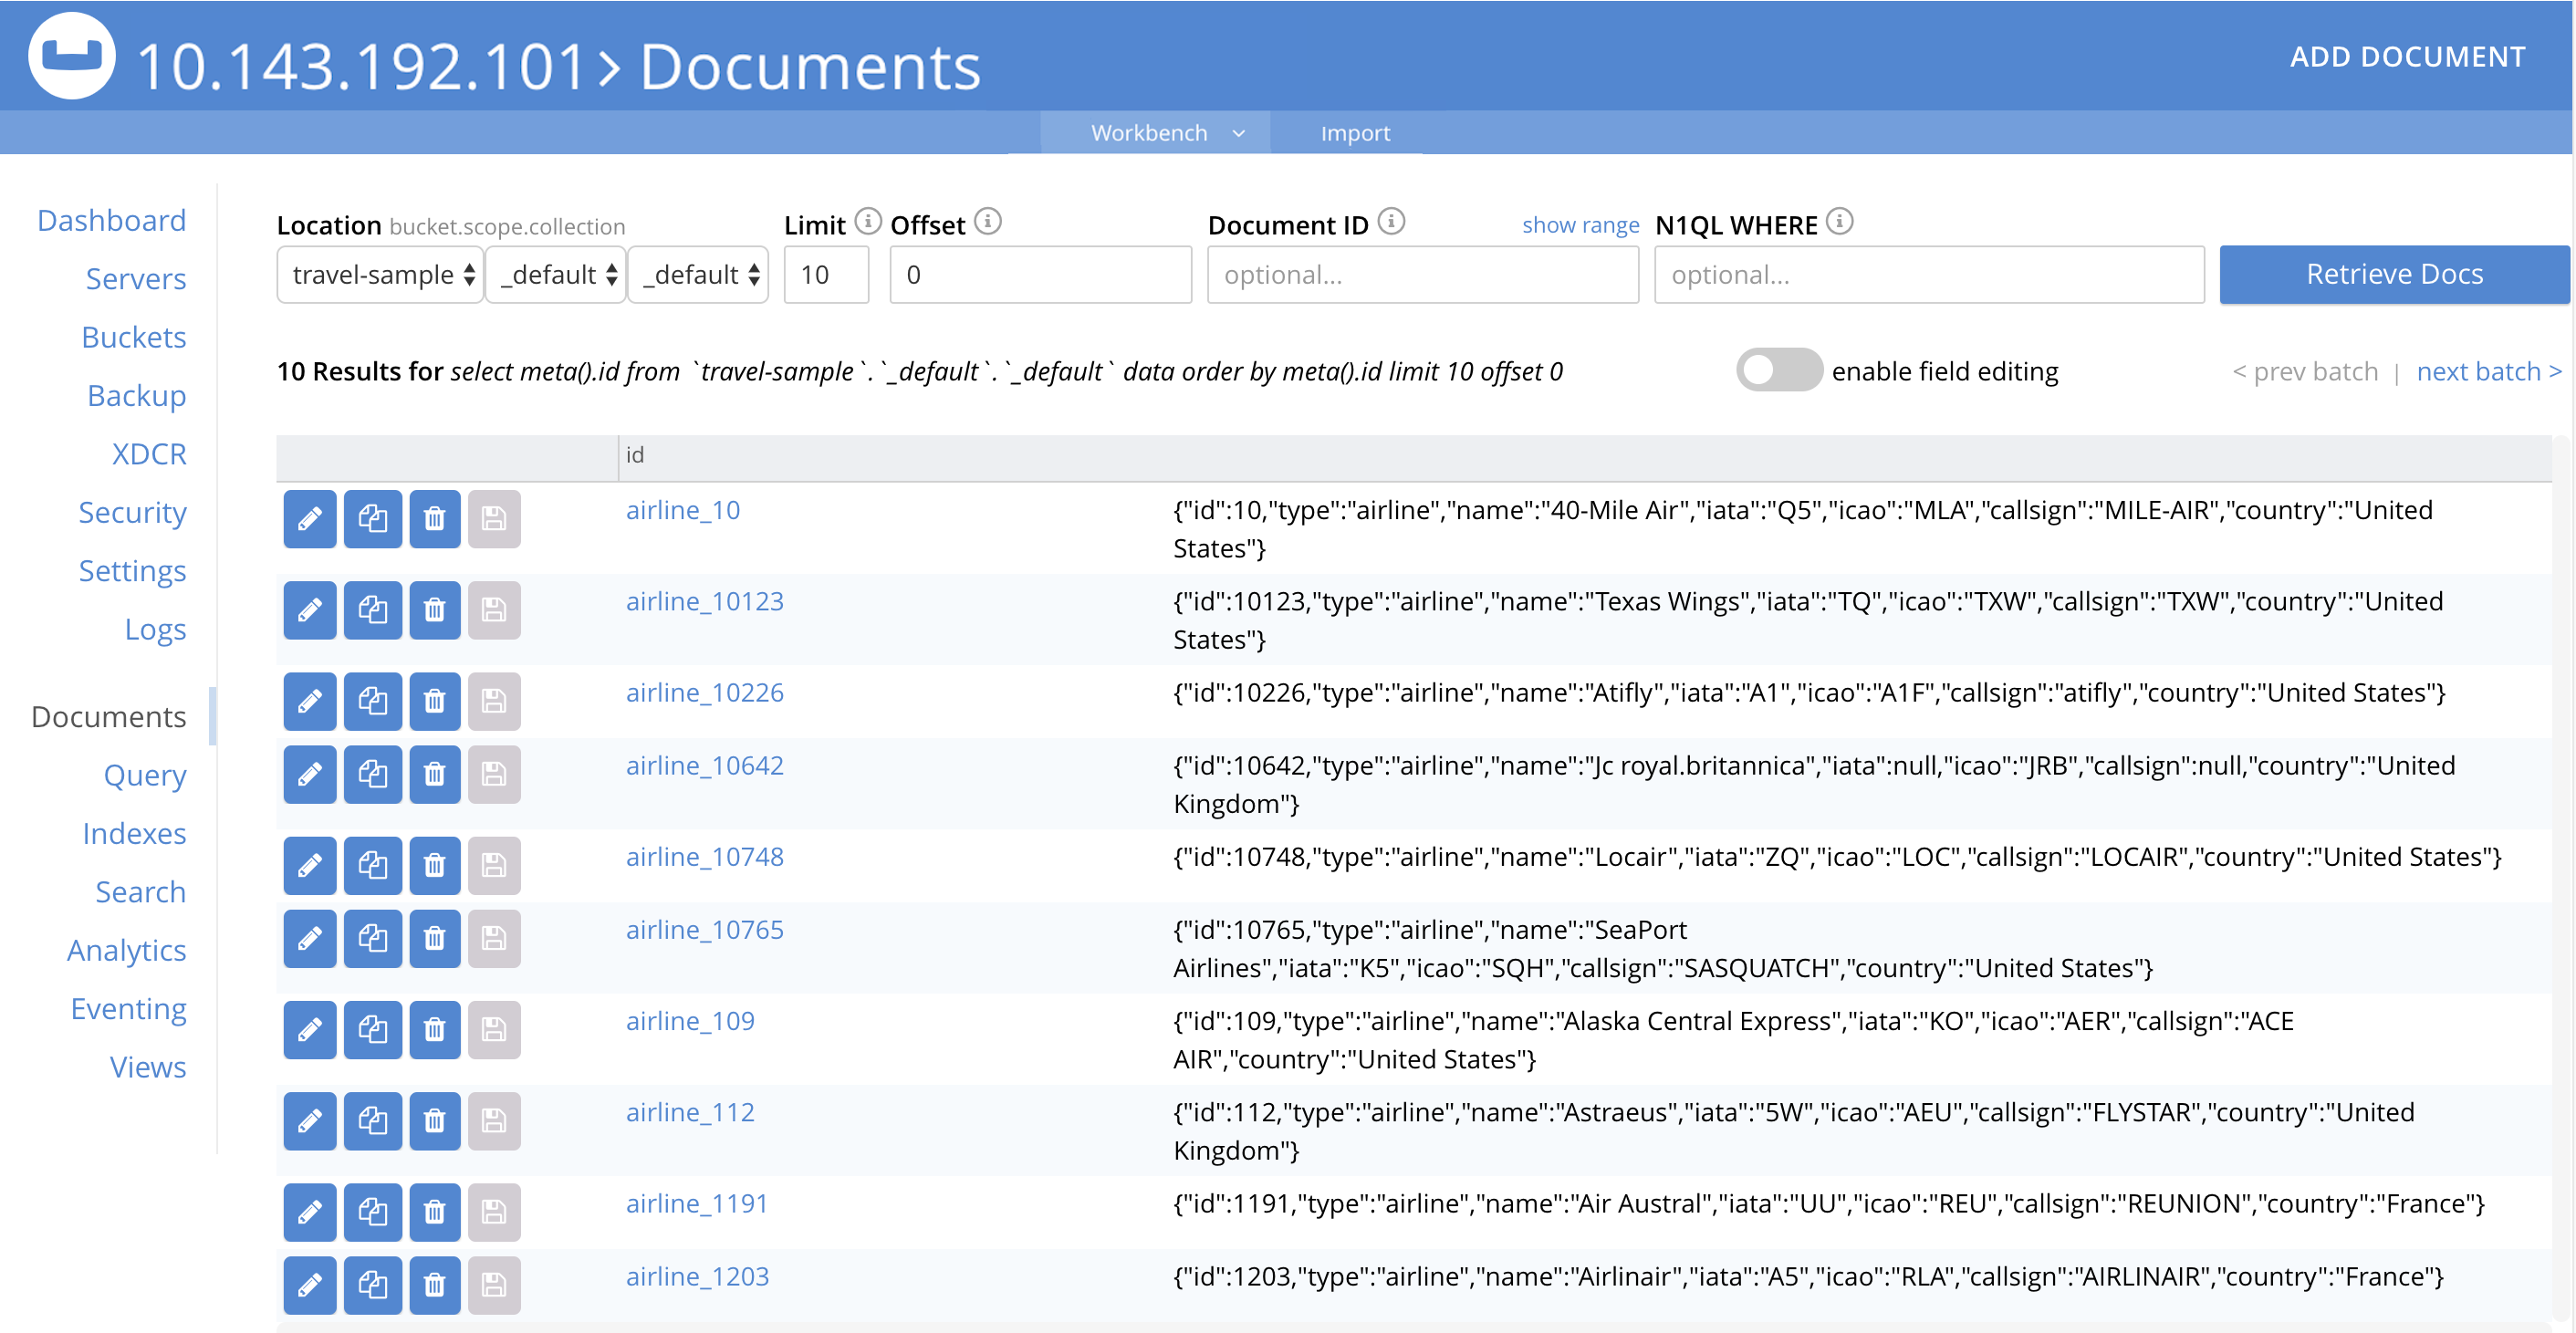 documentsScreenWithDocuments